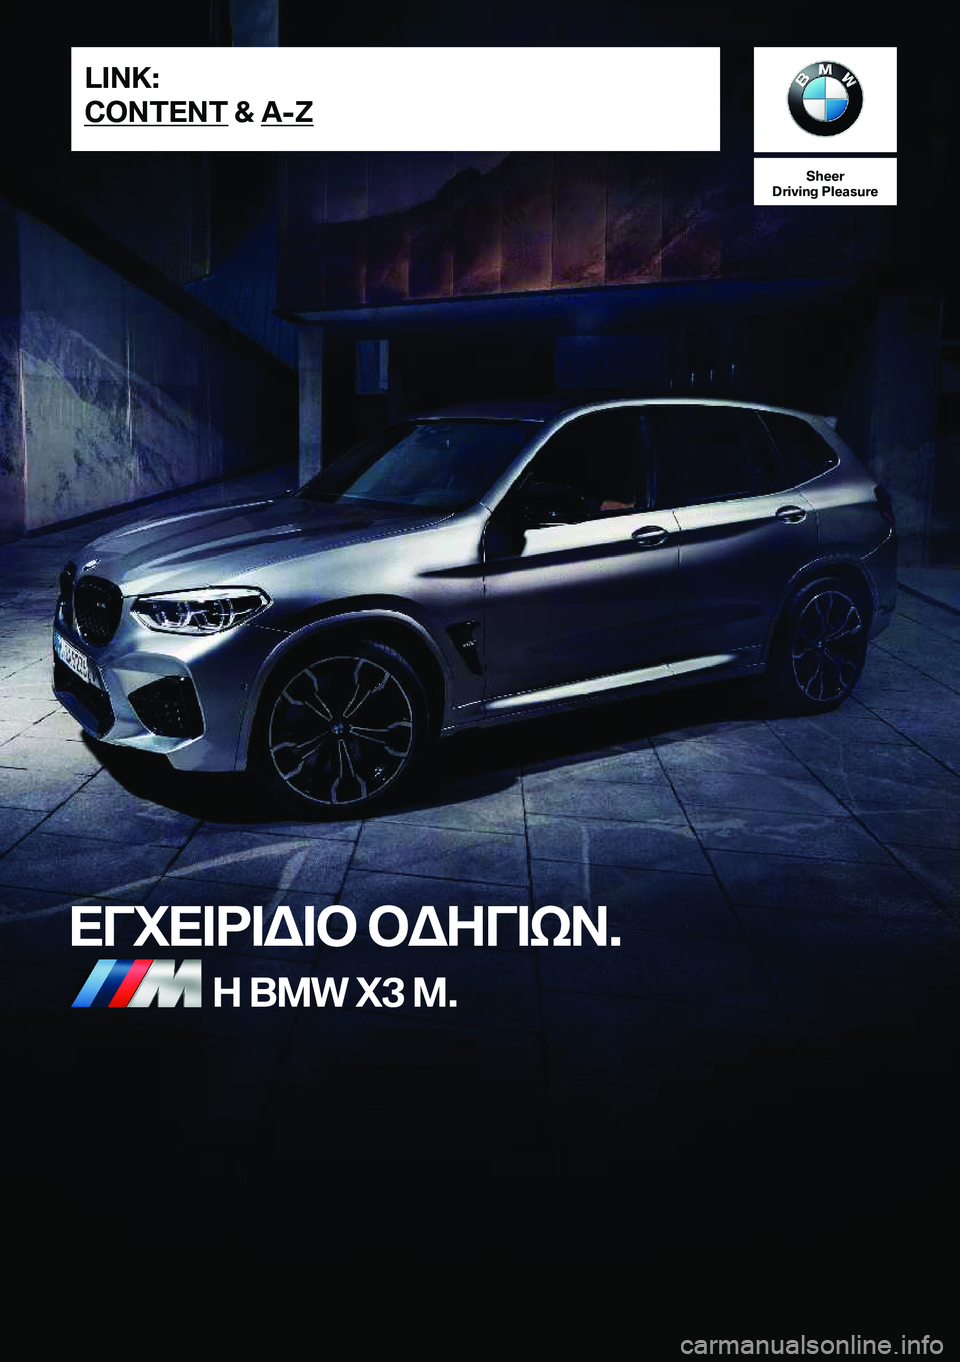 BMW X3 M 2020  ΟΔΗΓΌΣ ΧΡΉΣΗΣ (in Greek) �S�h�e�e�r
�D�r�i�v�i�n�g��P�l�e�a�s�u�r�e
XViX=d=W=b�bWZV=kA�.Z��B�M�W��X�3��M�.�L�I�N�K�:
�C�O�N�T�E�N�T��&��A�-�Z�O�n�l�i�n�e��E�d�i�t�i�o�n��f�o�r��P�a�r�t��n�o�.��0�